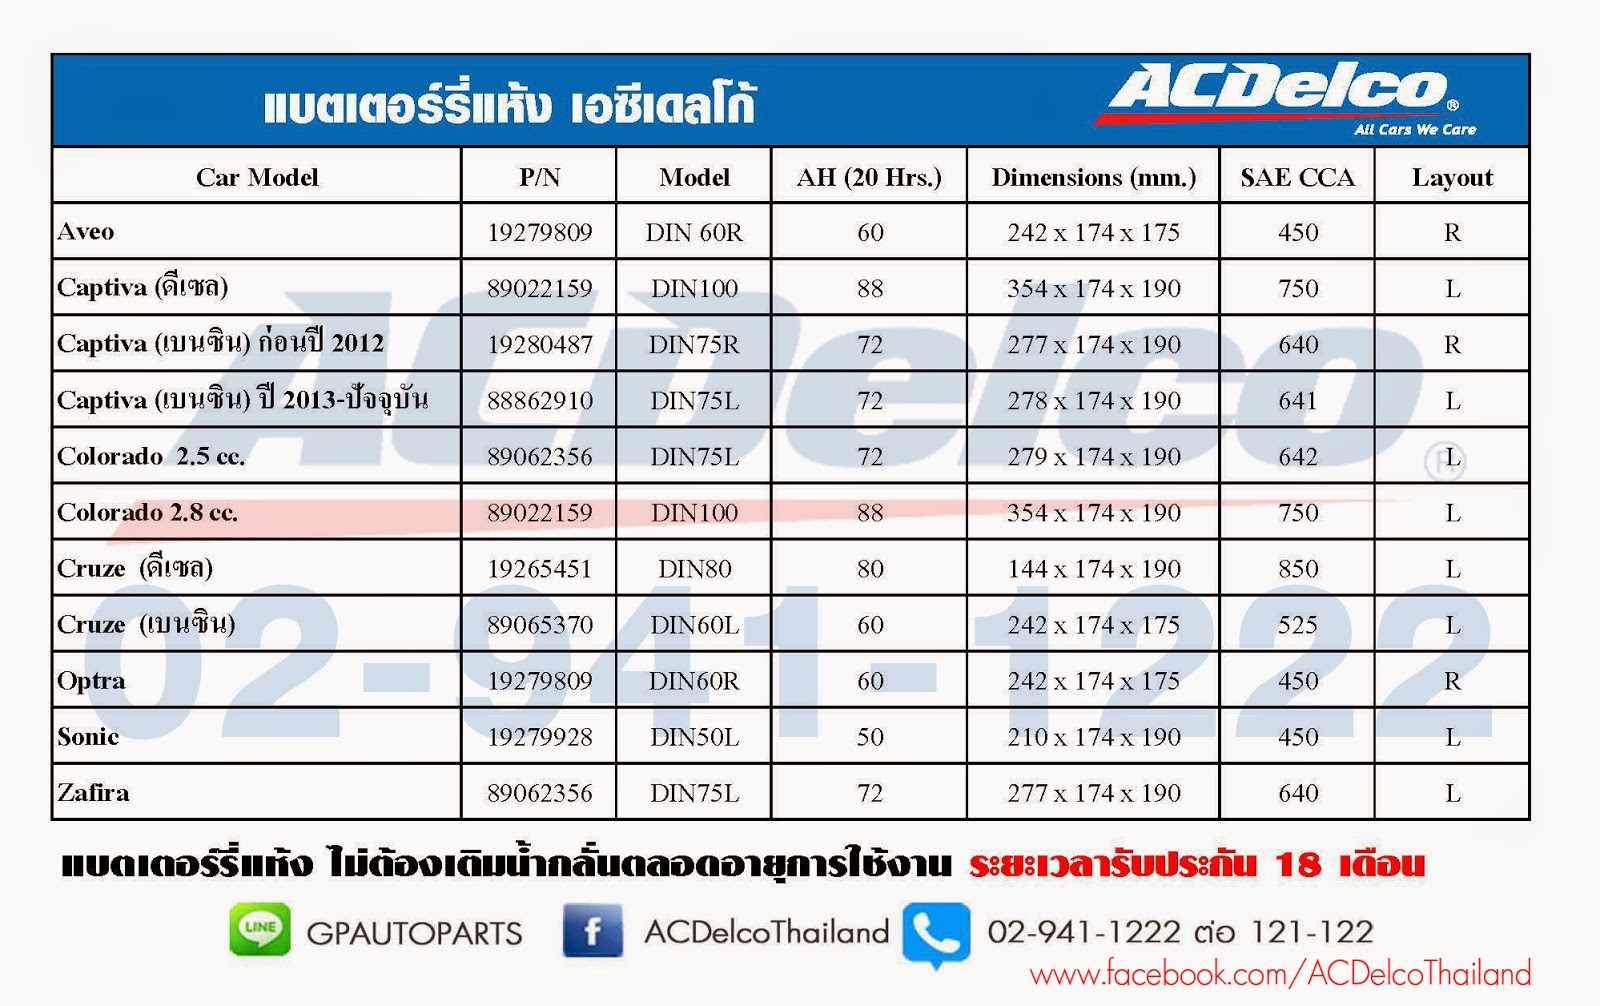 ACDelco Thailand: ACDelco Battery แห้ง SMF คุณภาพมาตรฐาน ระดับโลก